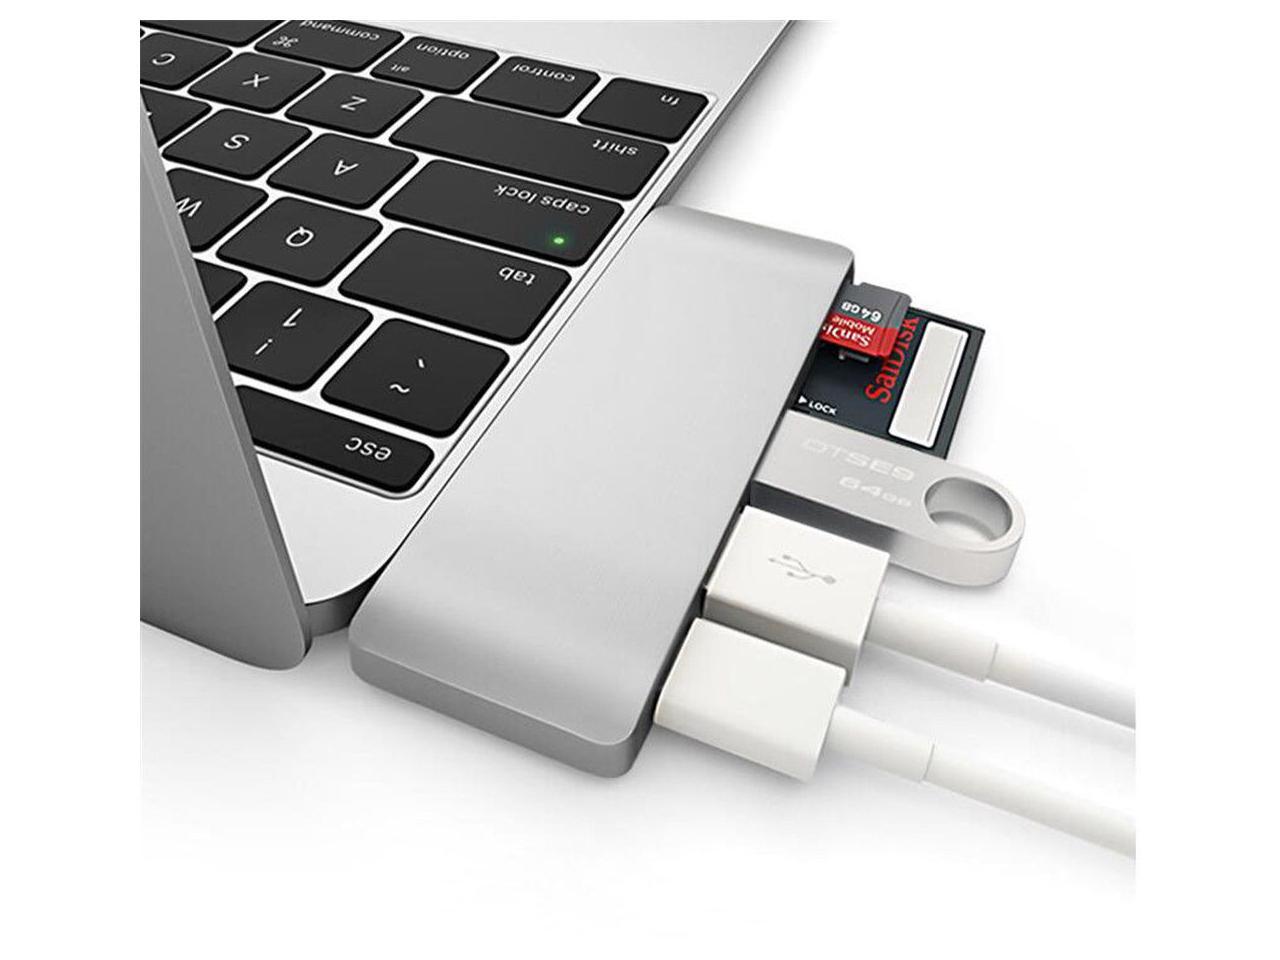 Jili Online 5 in 1 Multi Funtion USB 3.0 Hub USB 3.0 to 2-Port USB 2.0 10/100/1000 Gigabit Ethernet Adapter for PC Laptop Mac SD & MicroSD/TF Dual Card Reader 